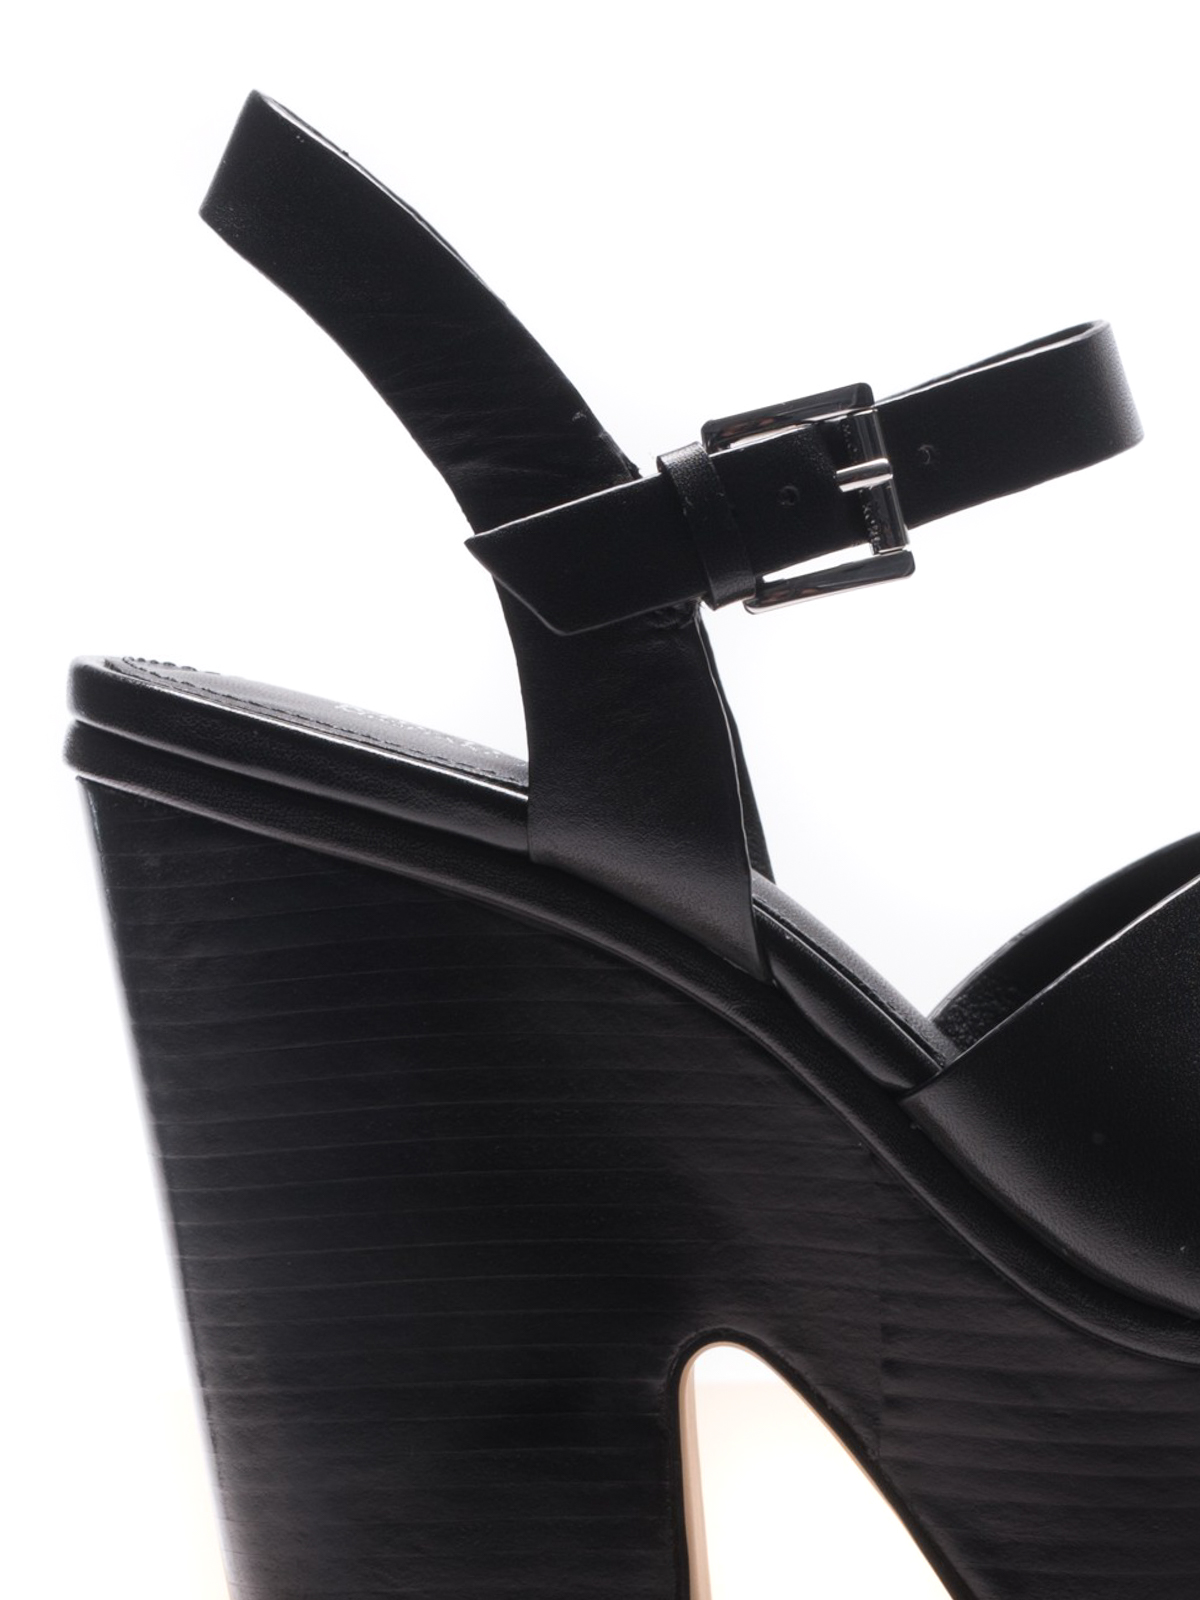 Michael Michael Kors Divia Platform Sandals  Black Sandals Shoes   WM542344  The RealReal